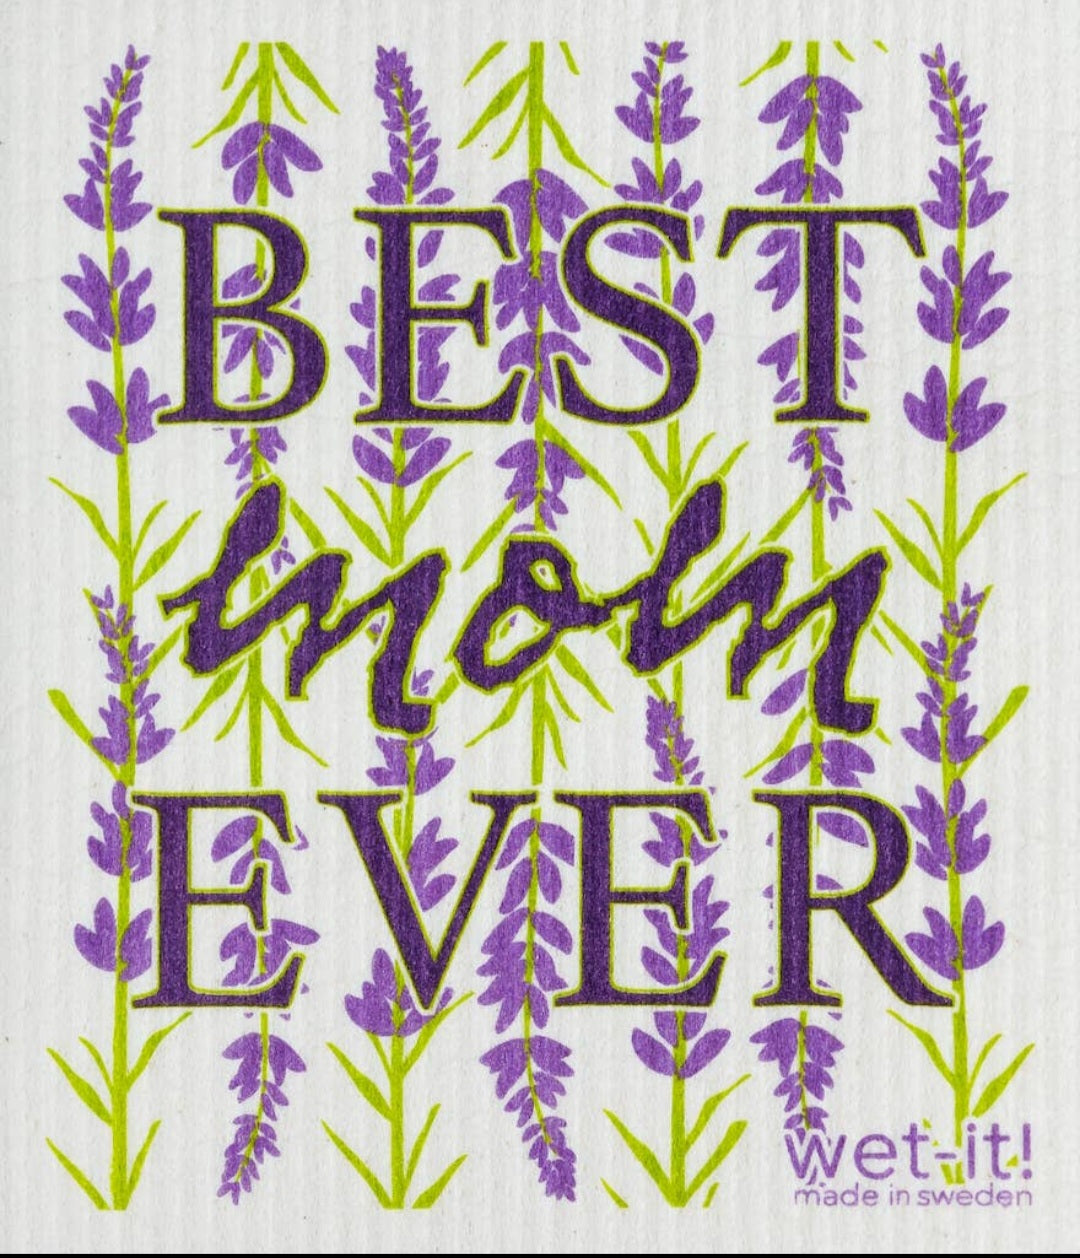 " Best Mom Ever" Wet-it!